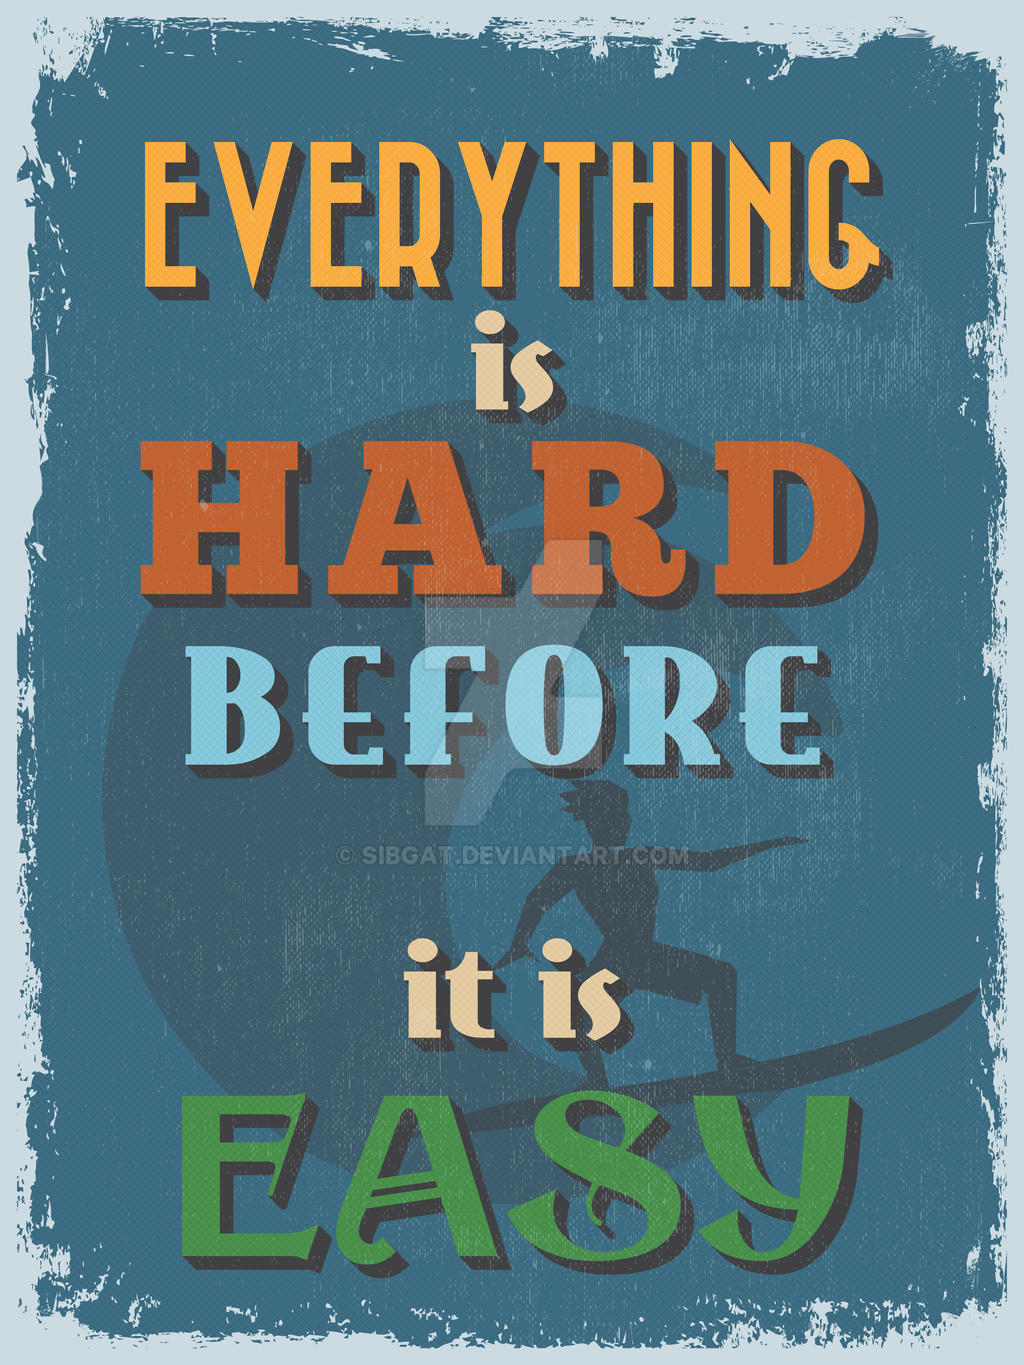 Retro Vintage Motivational Quote Poster. by sibgat on DeviantArt